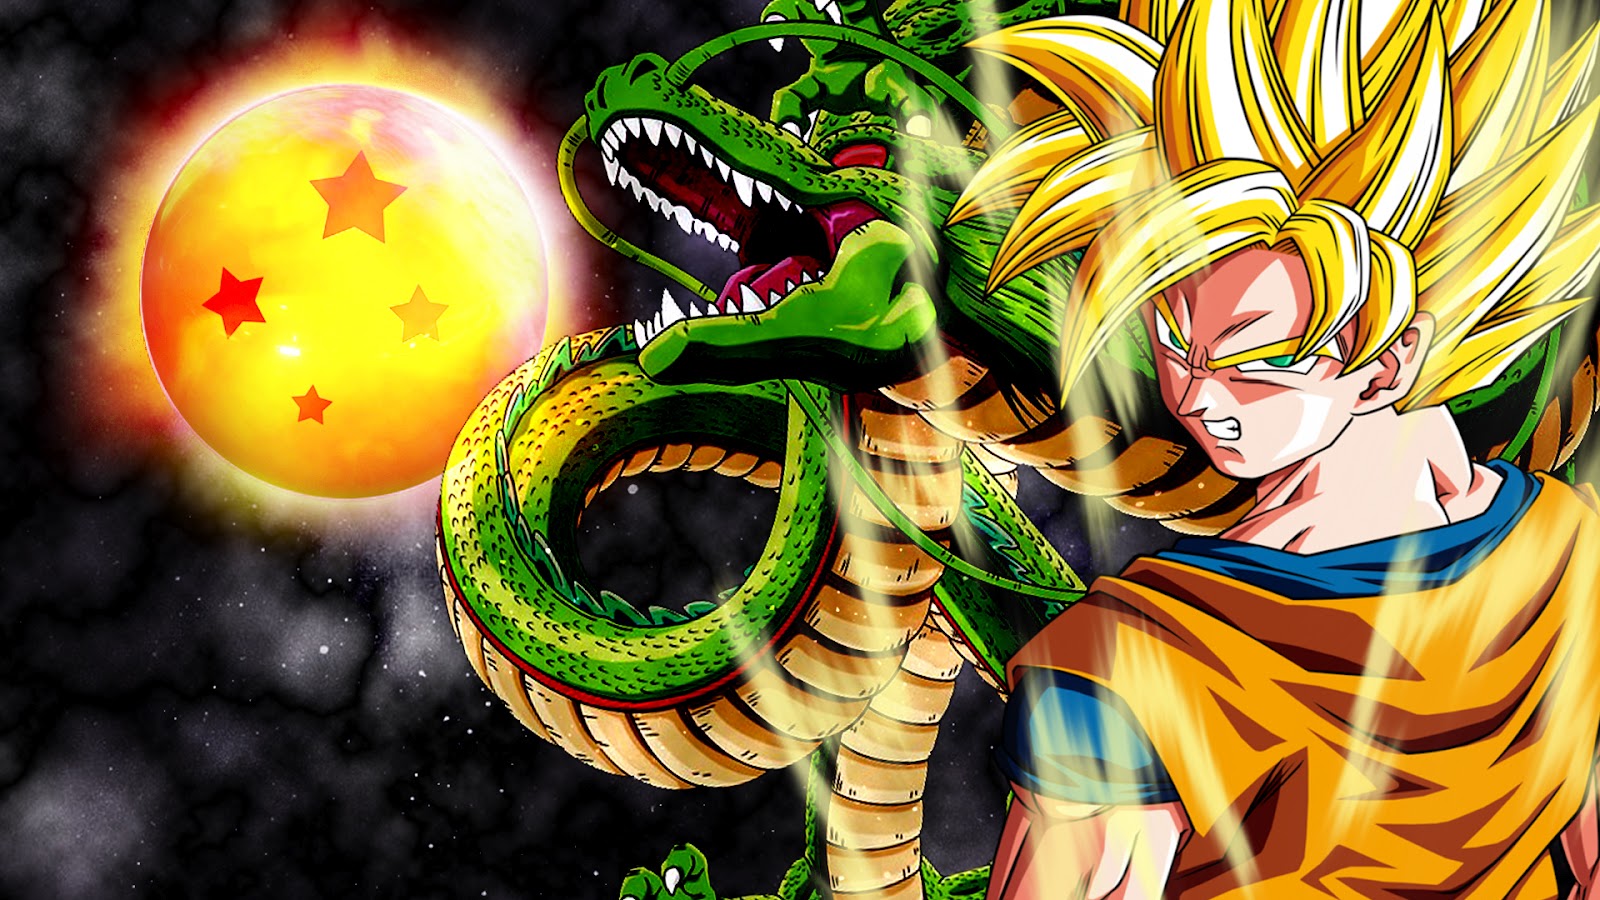 imagenes de goku super sayayin 1 - Goku Vegeta Gohan Trunks y Goten en super sayayin 1 4 